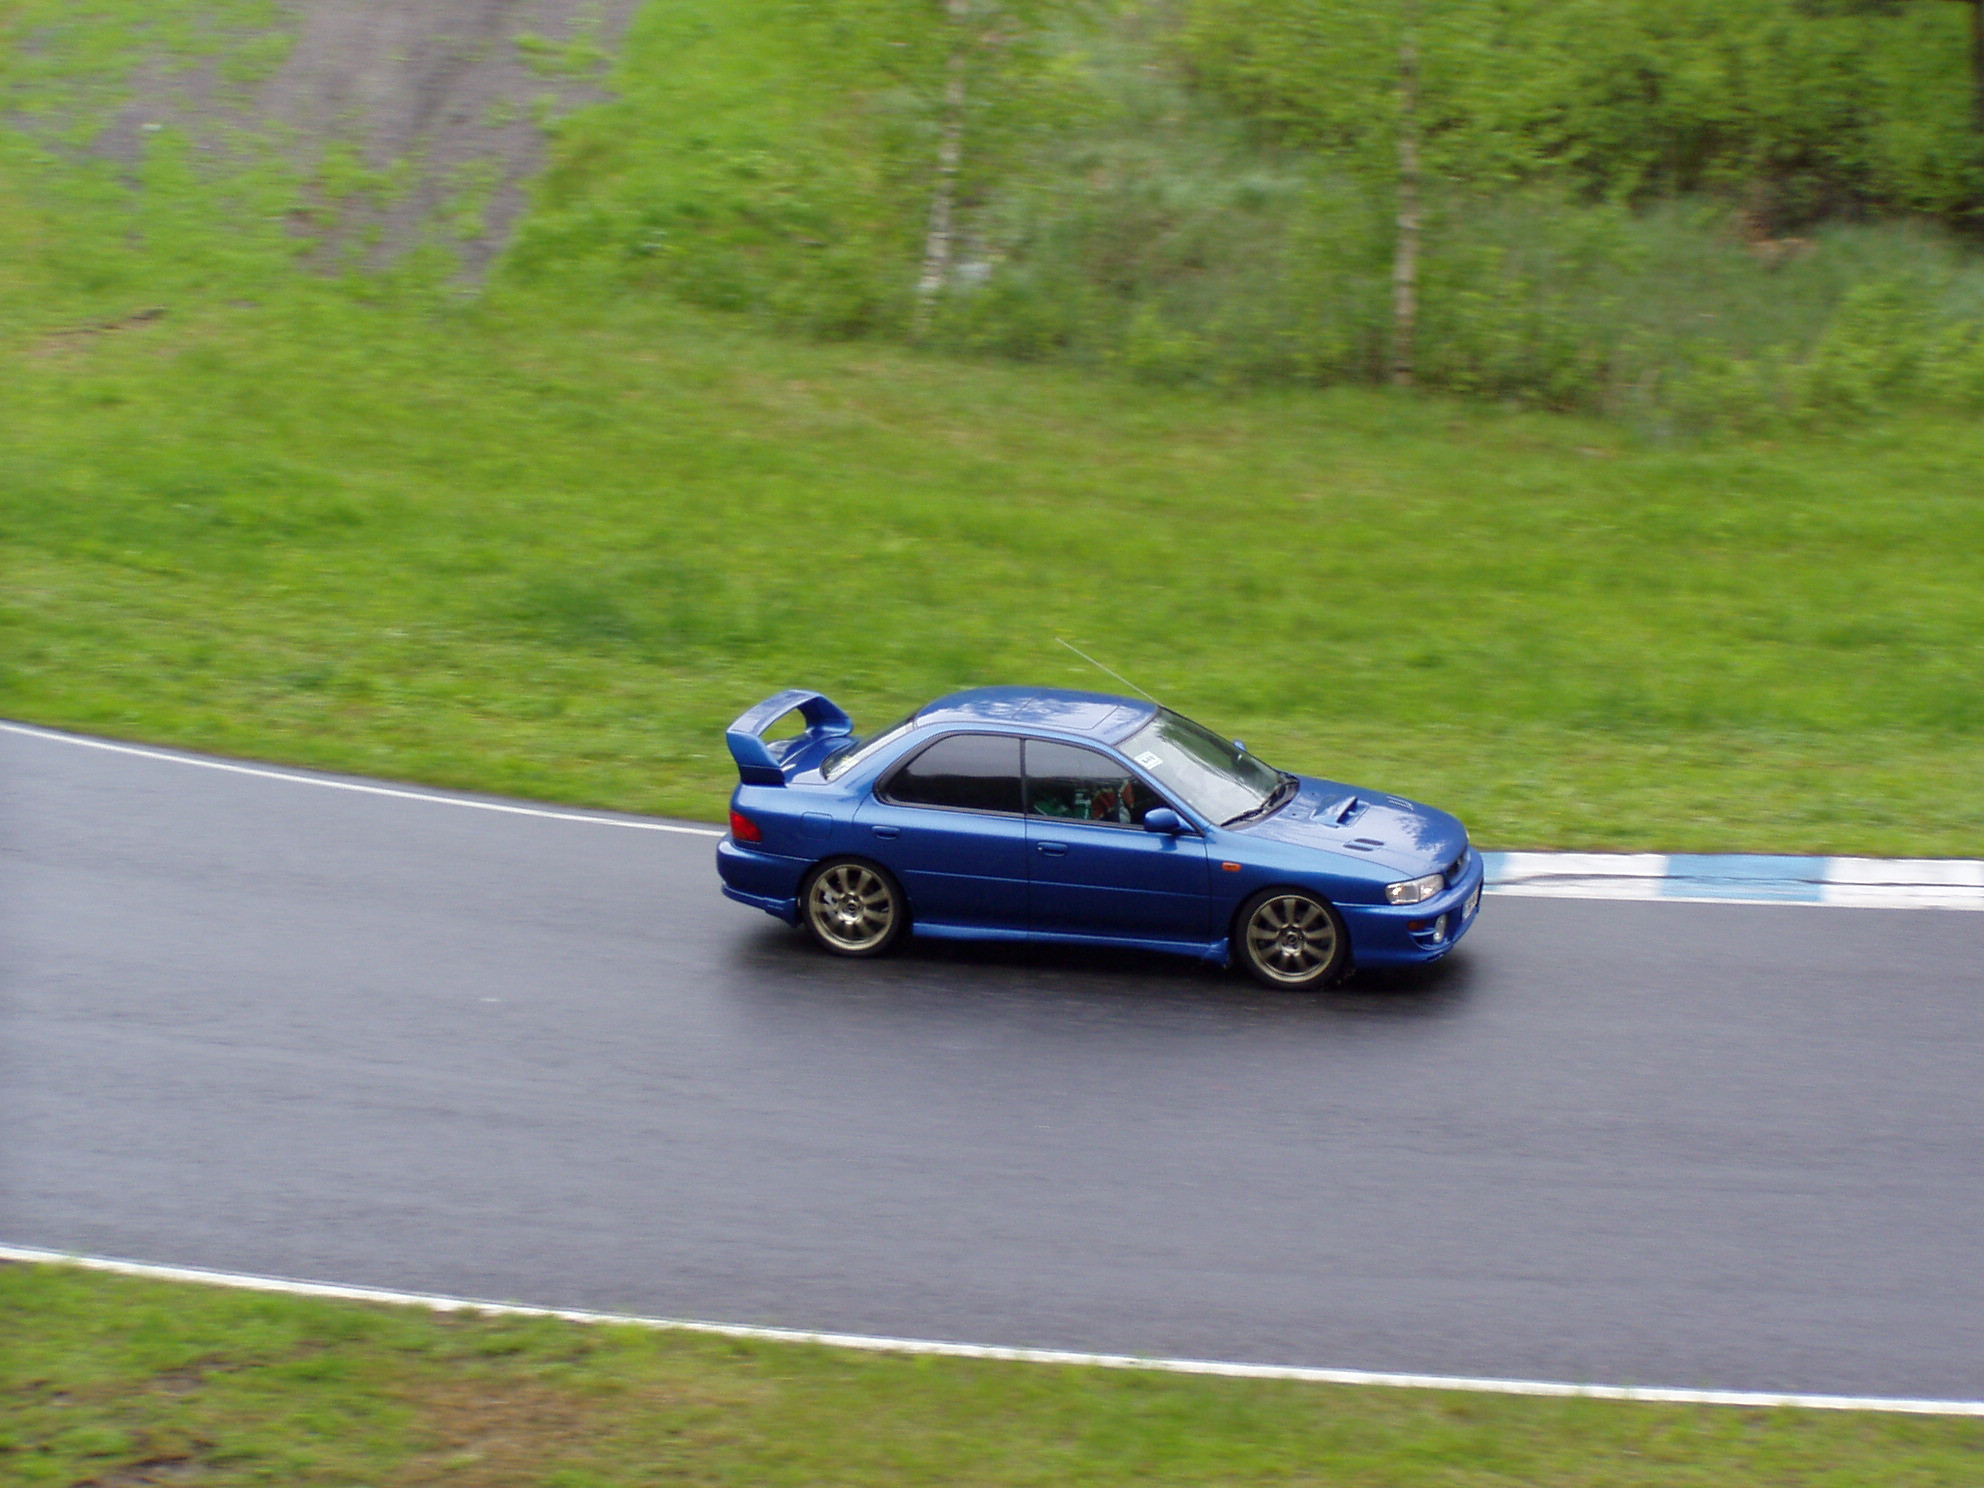 X-Treme ratapÃ¤ivÃ¤ 3.6.2006 Ahvenisto, Sininen Subaru Impreza